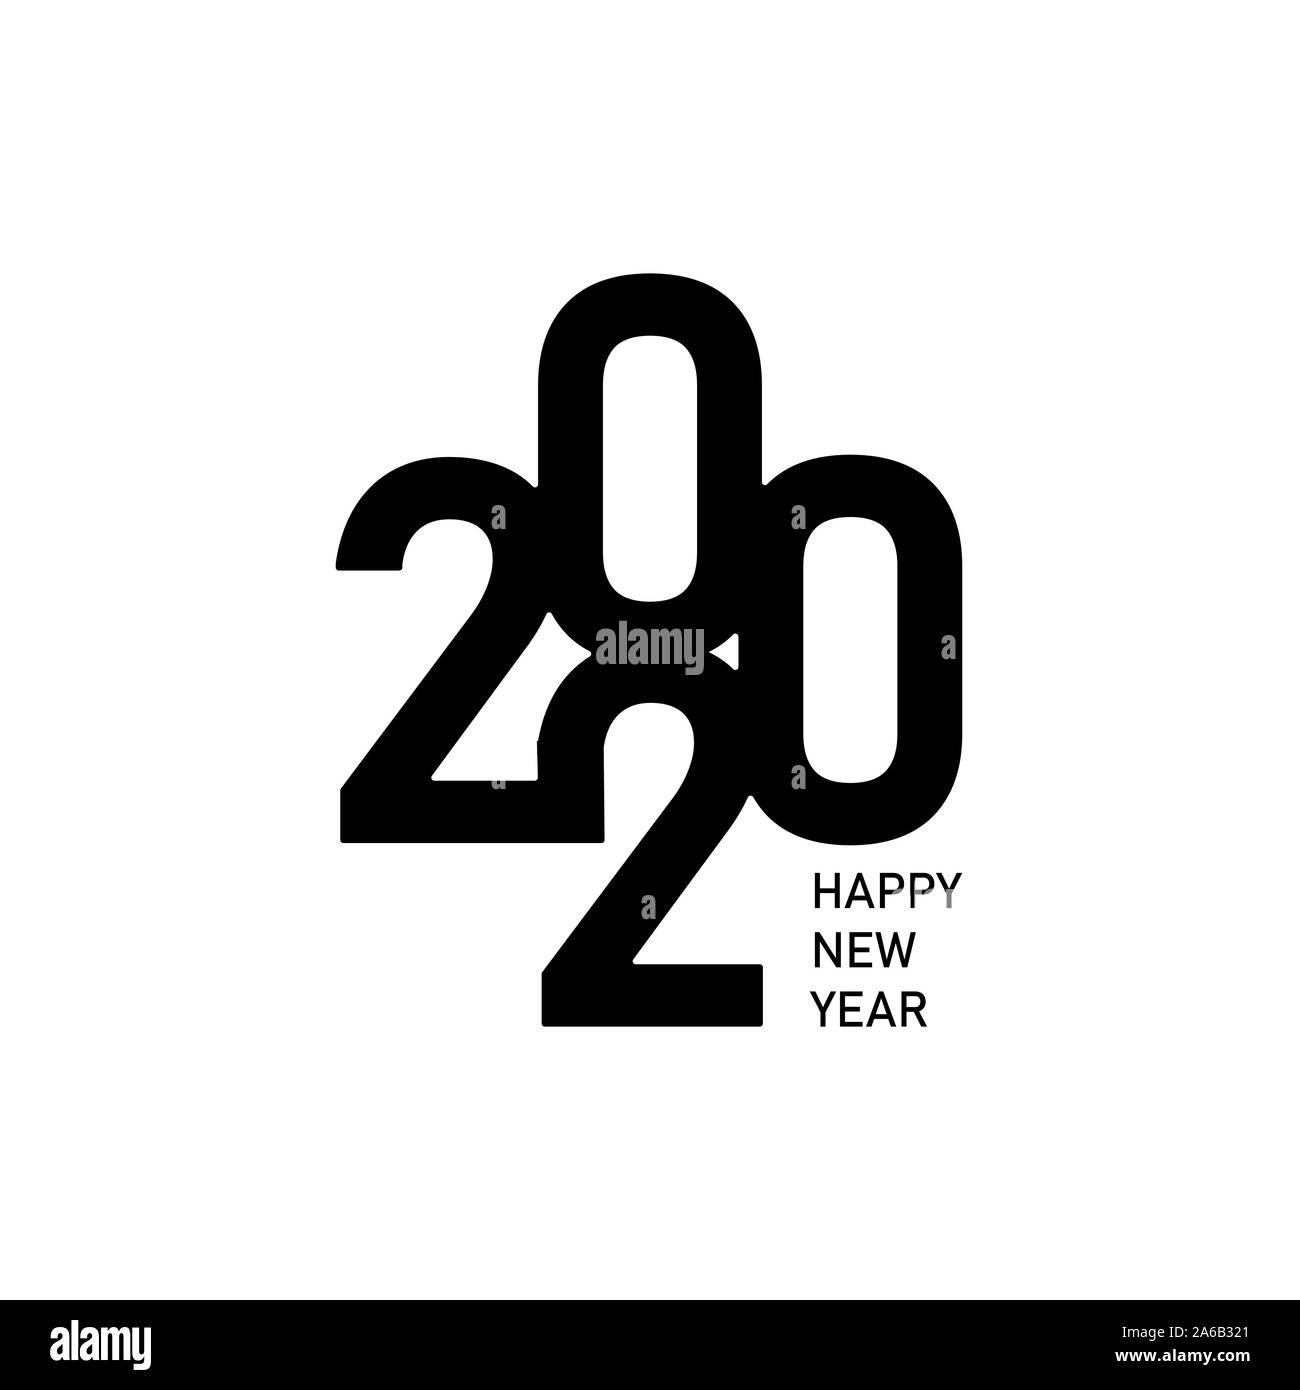 Happy New Year 2020 Text Design logo, Vector illustration Stock Vector ...